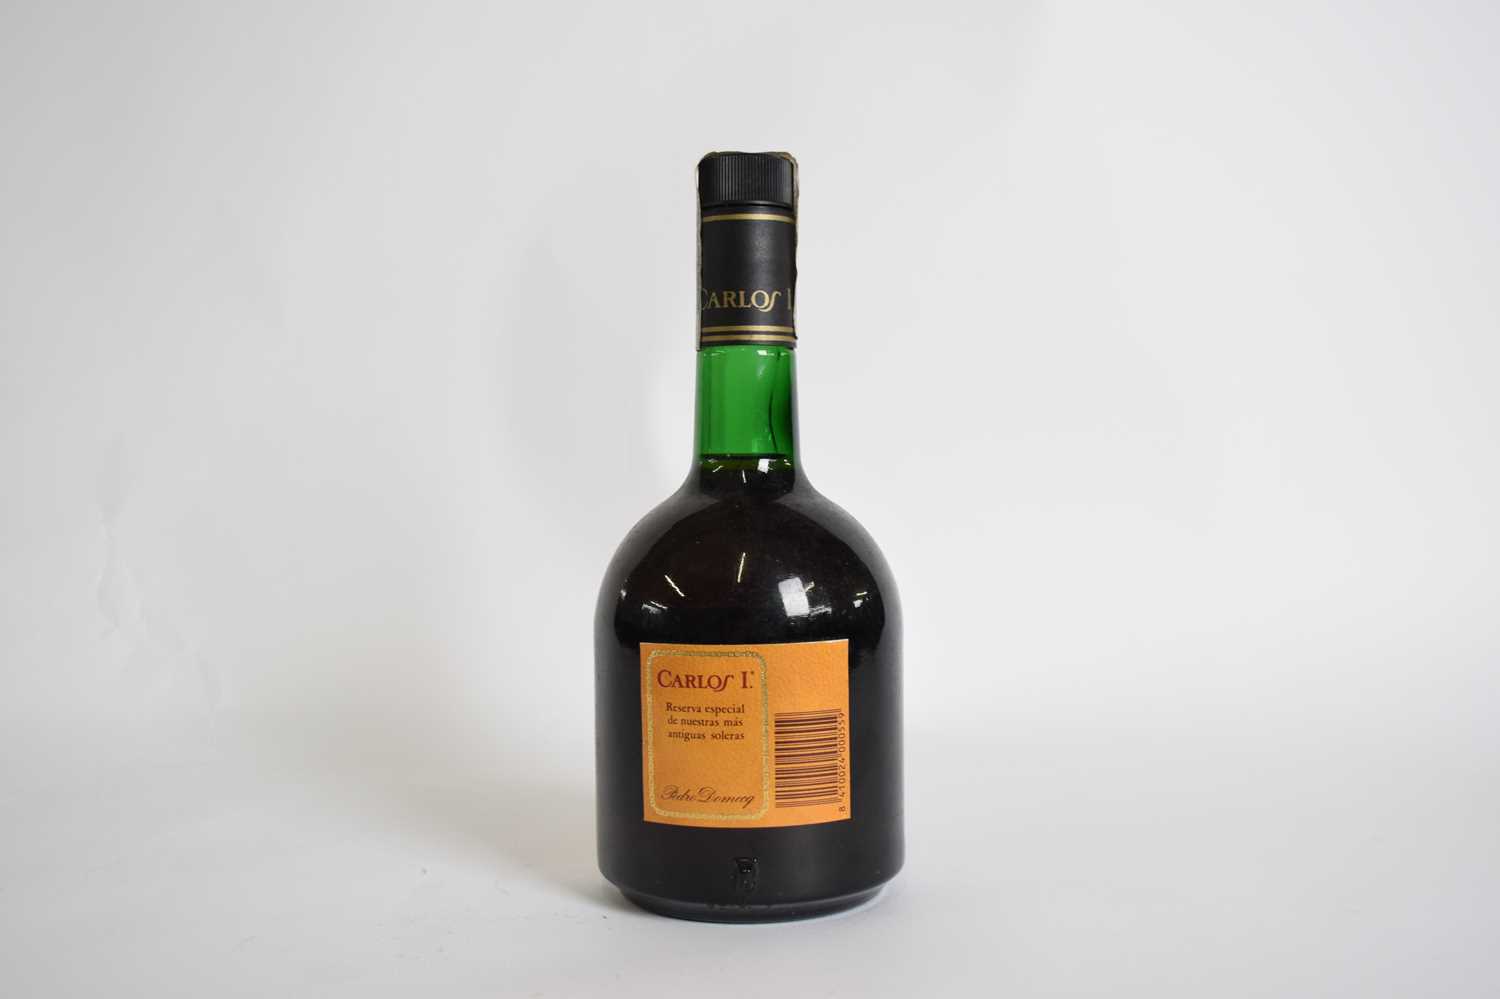 One bottle Carlos I brandy - Image 2 of 2